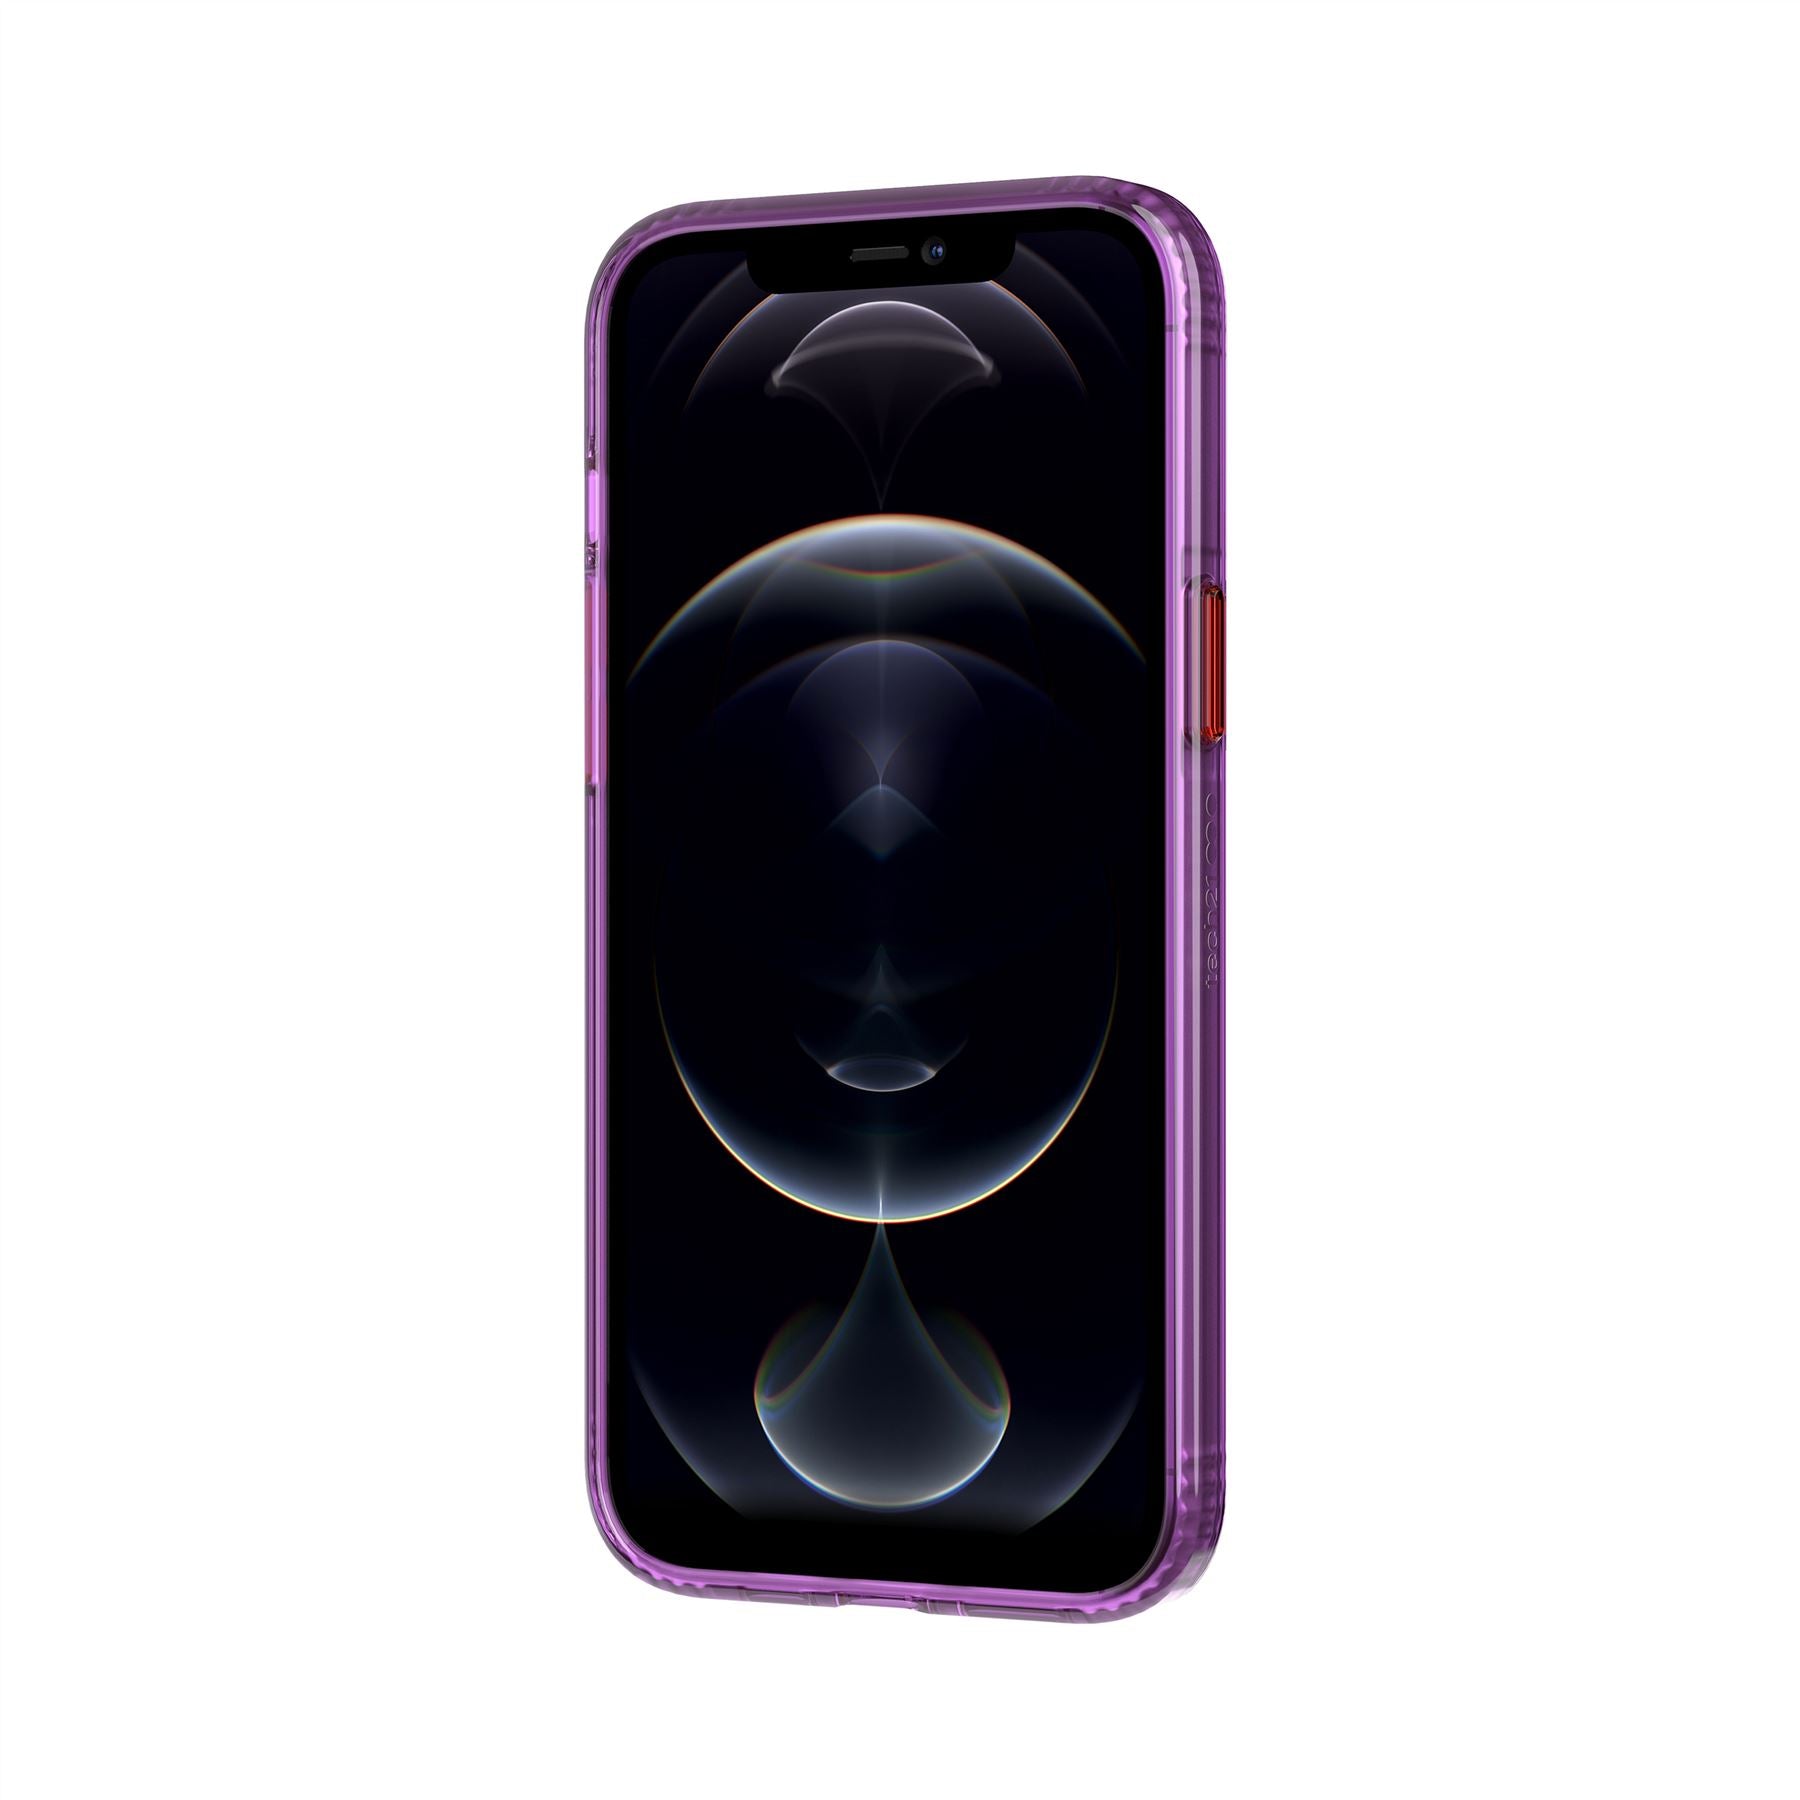 Evo Art  - Apple iPhone 12 Pro Max Case - Orchid Purple